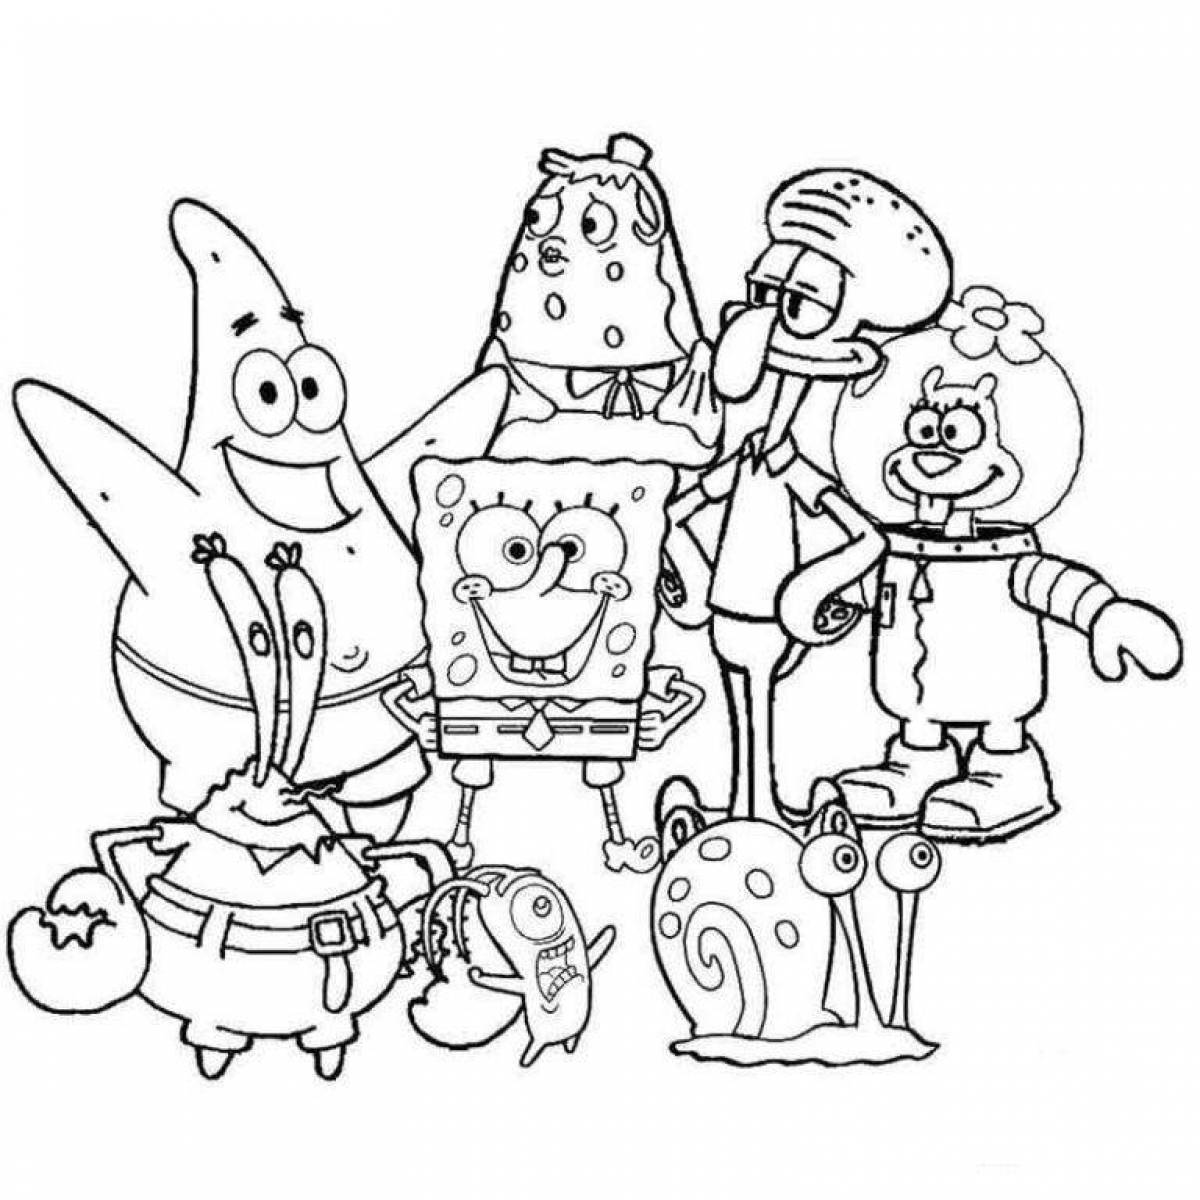 Spongebob and patrick #3